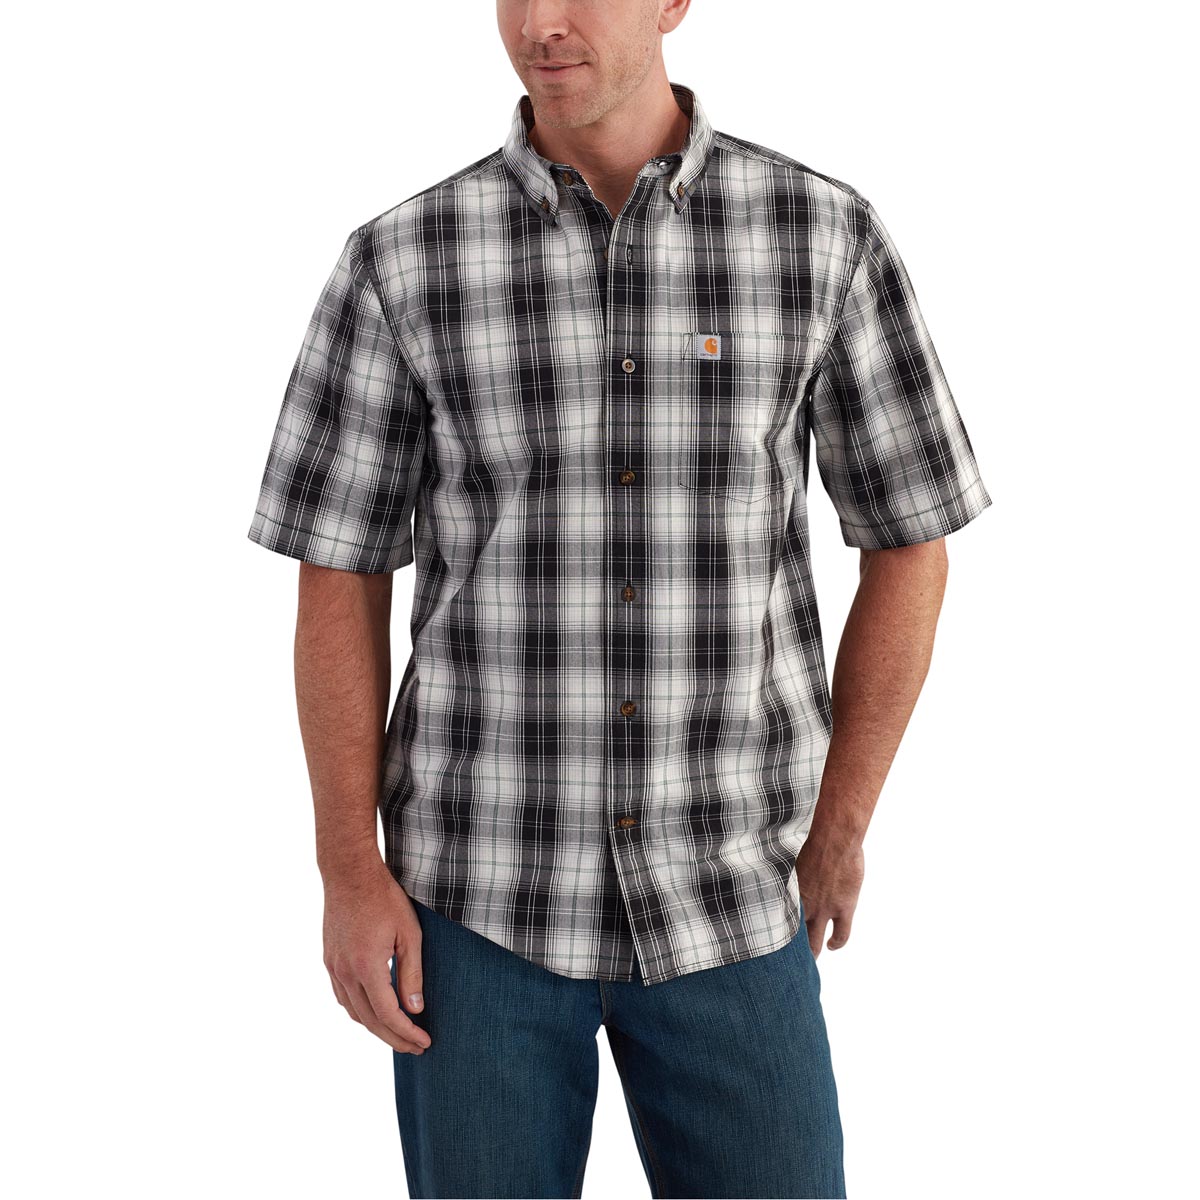 Carhartt Men's Essential Plaid Button Down Short Sleeve Shirt